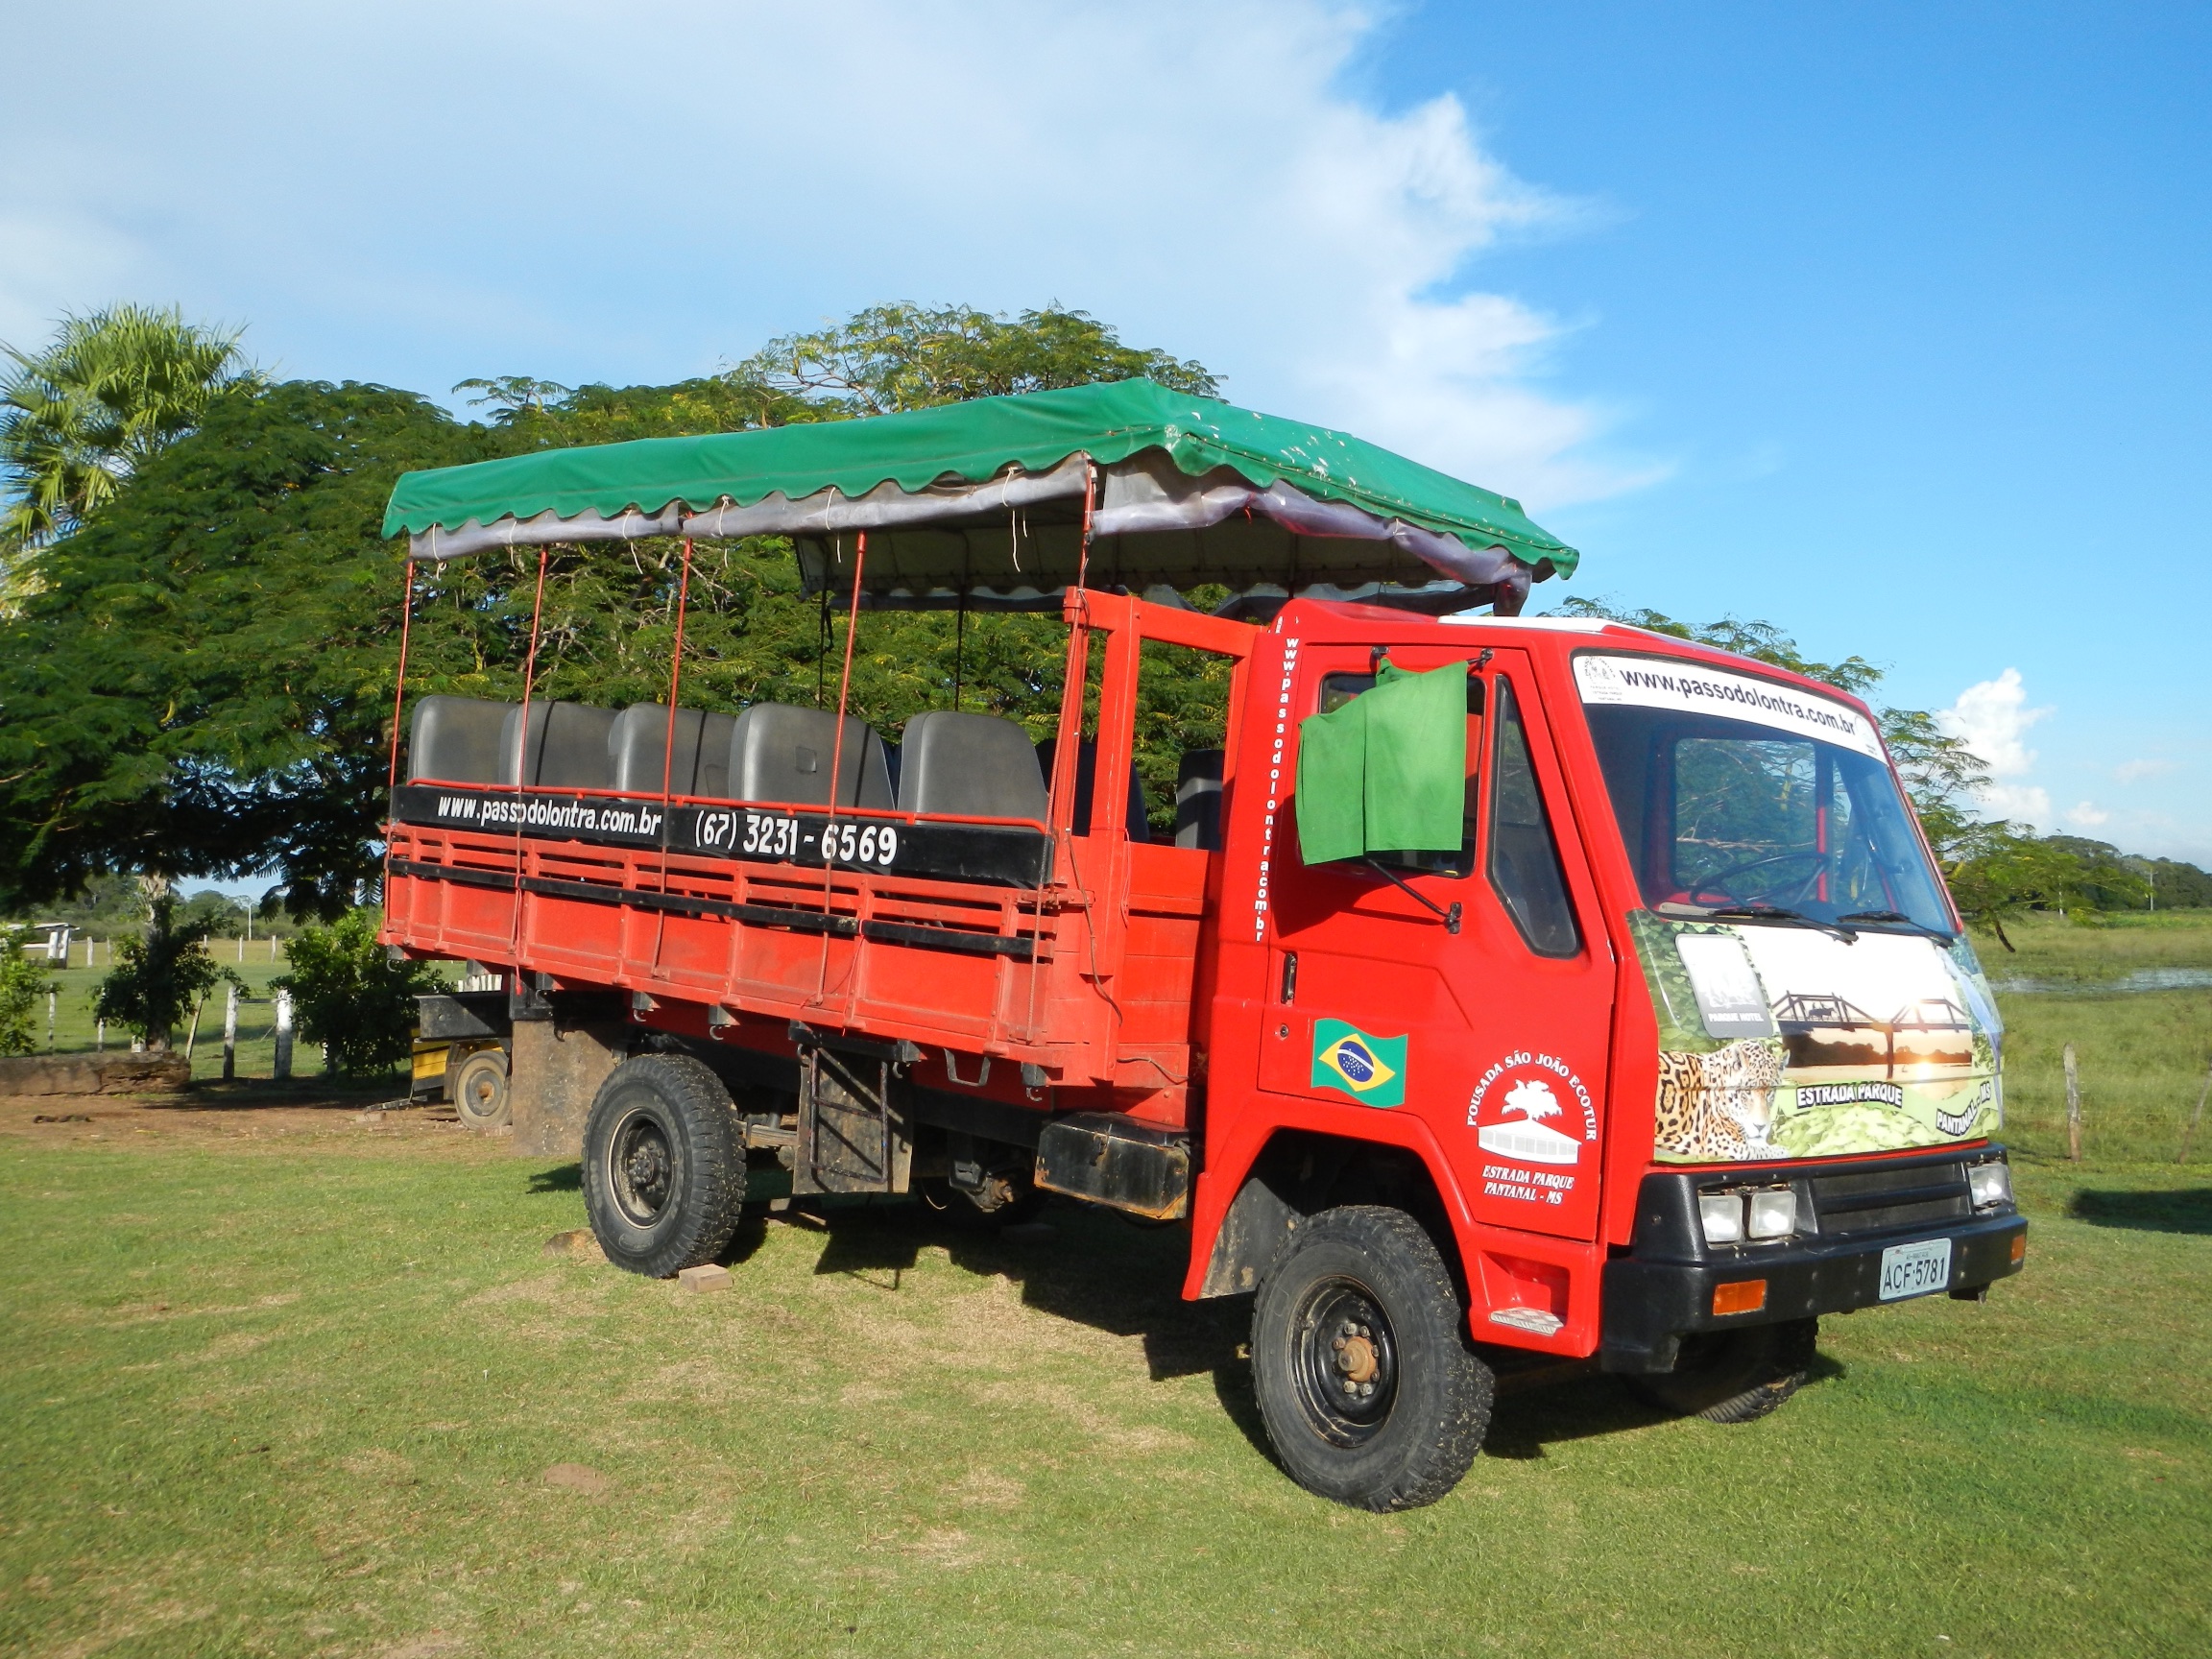  Safari truck, Pantanal, Brazil 